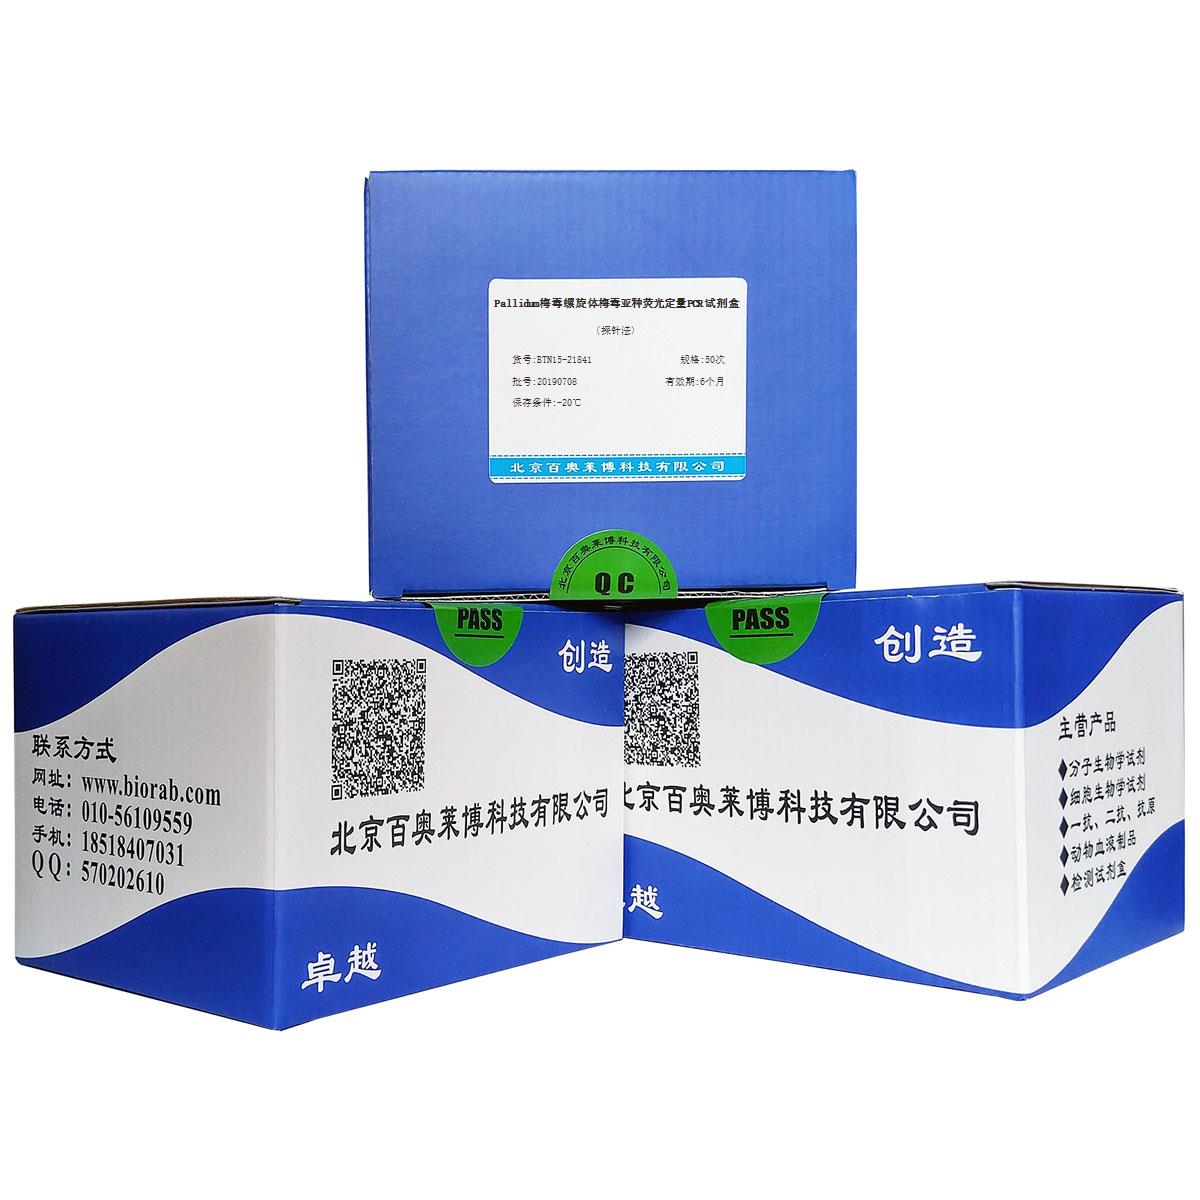 Pallidum梅毒螺旋体梅毒亚种荧光定量PCR试剂盒(探针法)